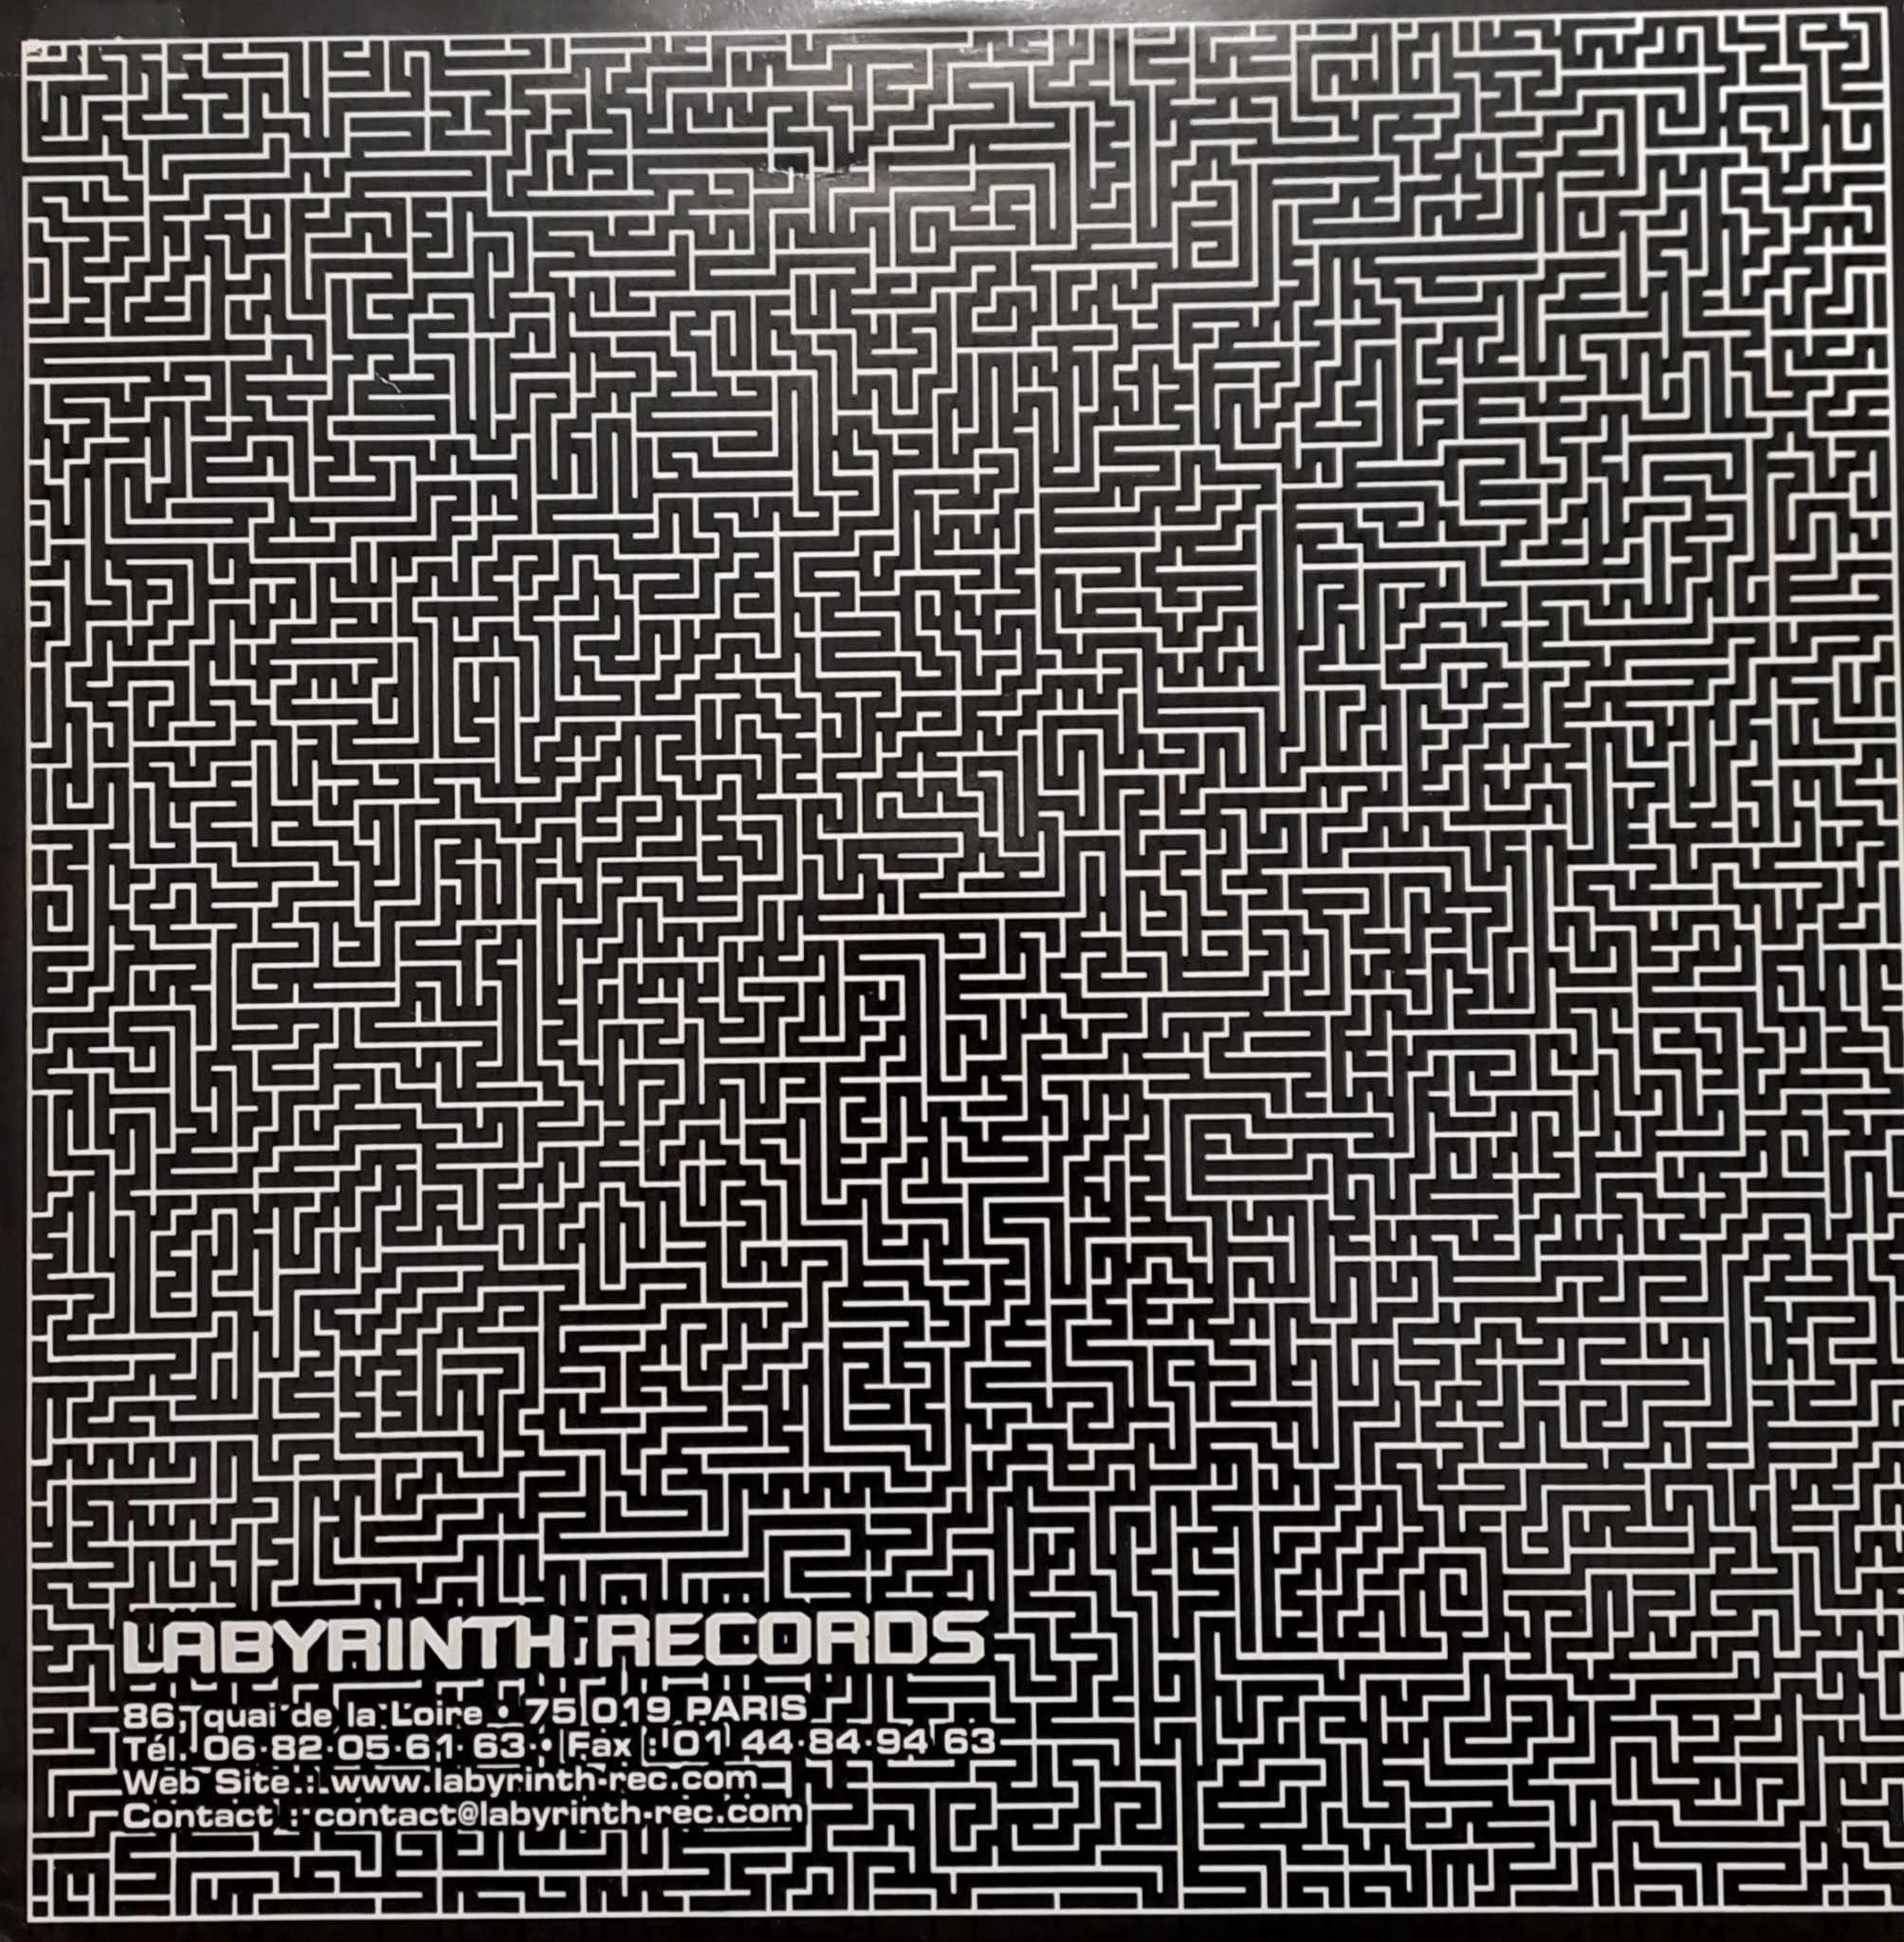 Labyrinth Records 03 - vinyle hardcore